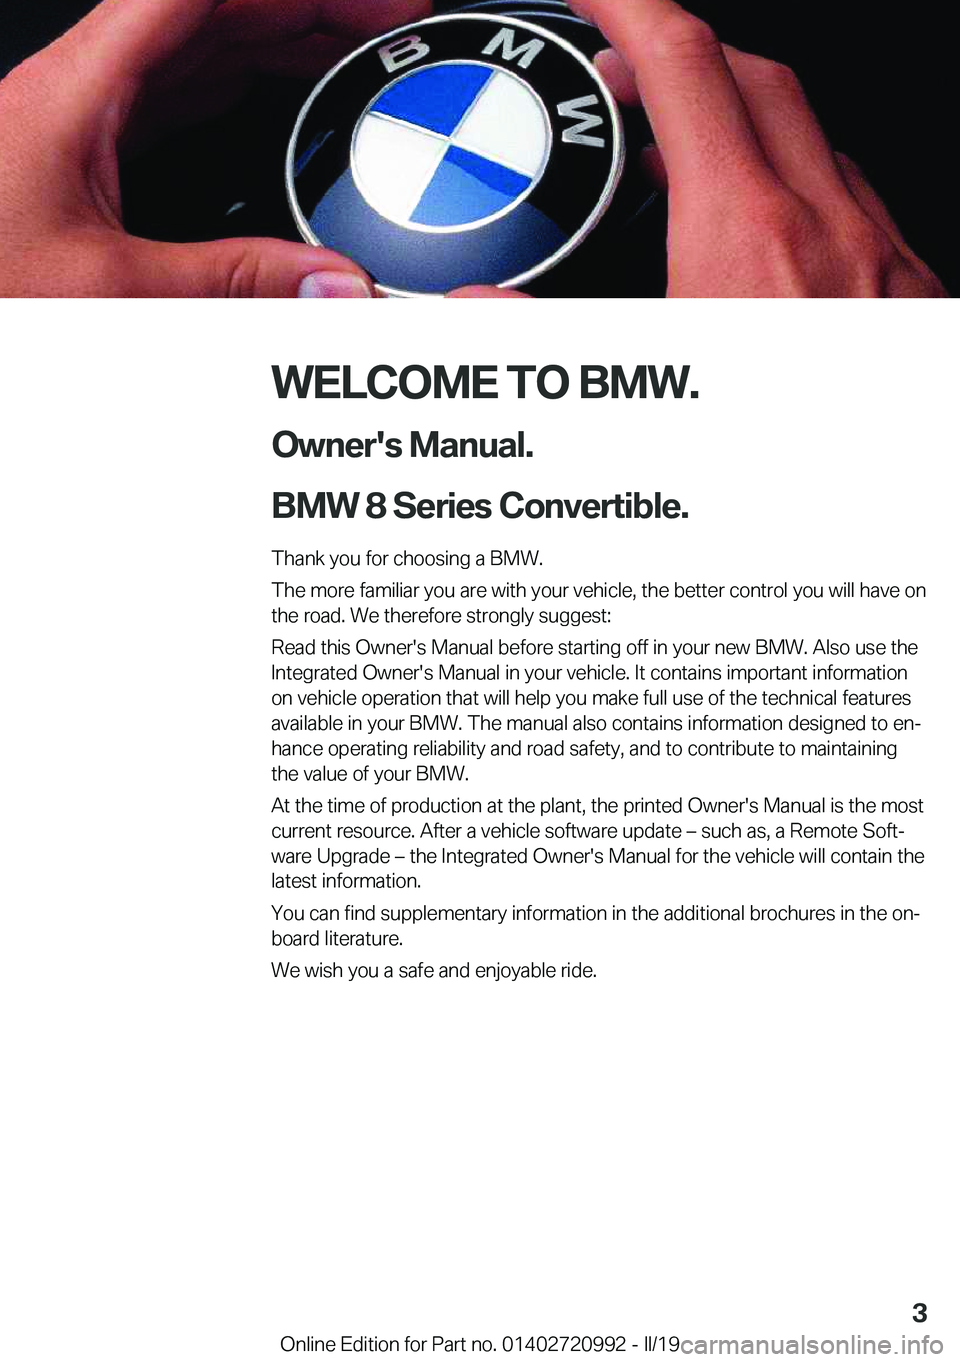 BMW 8 SERIES CONVERTIBLE 2020  Owners Manual �W�E�L�C�O�M�E��T�O��B�M�W�.�O�w�n�e�r�'�s��M�a�n�u�a�l�.
�B�M�W��8��S�e�r�i�e�s��C�o�n�v�e�r�t�i�b�l�e�.
�T�h�a�n�k��y�o�u��f�o�r��c�h�o�o�s�i�n�g��a��B�M�W�.
�T�h�e��m�o�r�e��f�a�m�